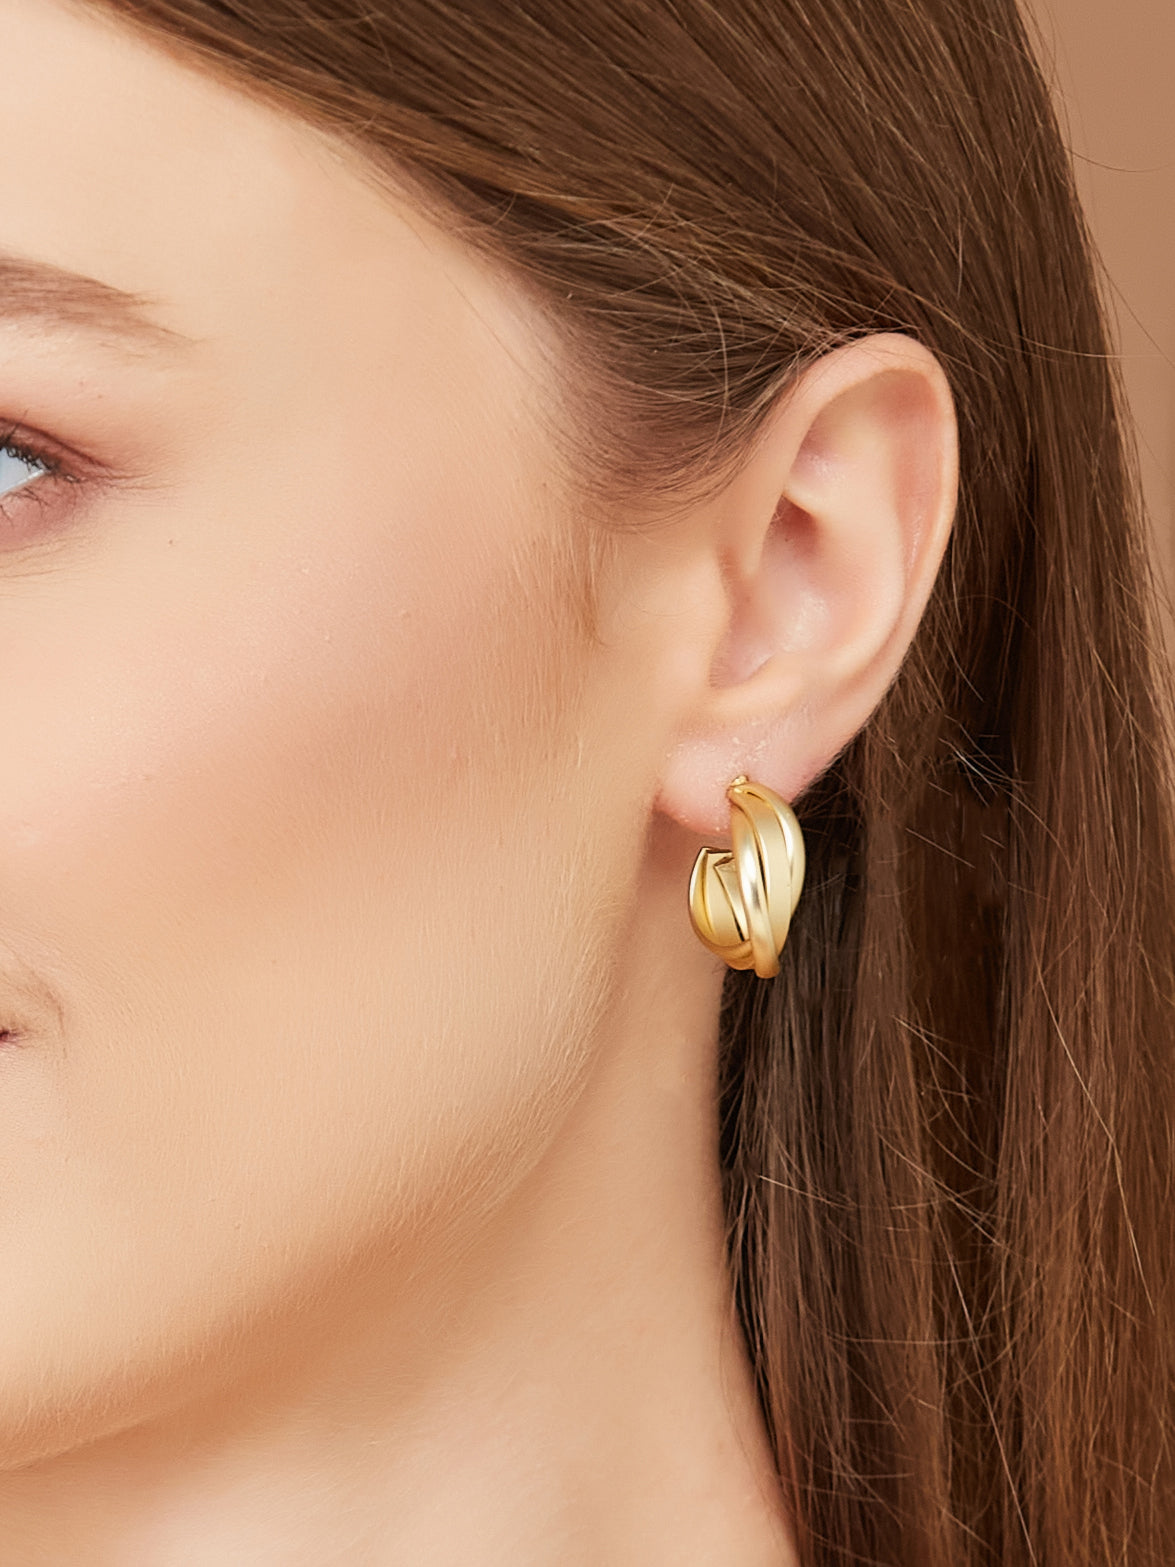 Gold Plated Small Hoop Earrings for women & girls